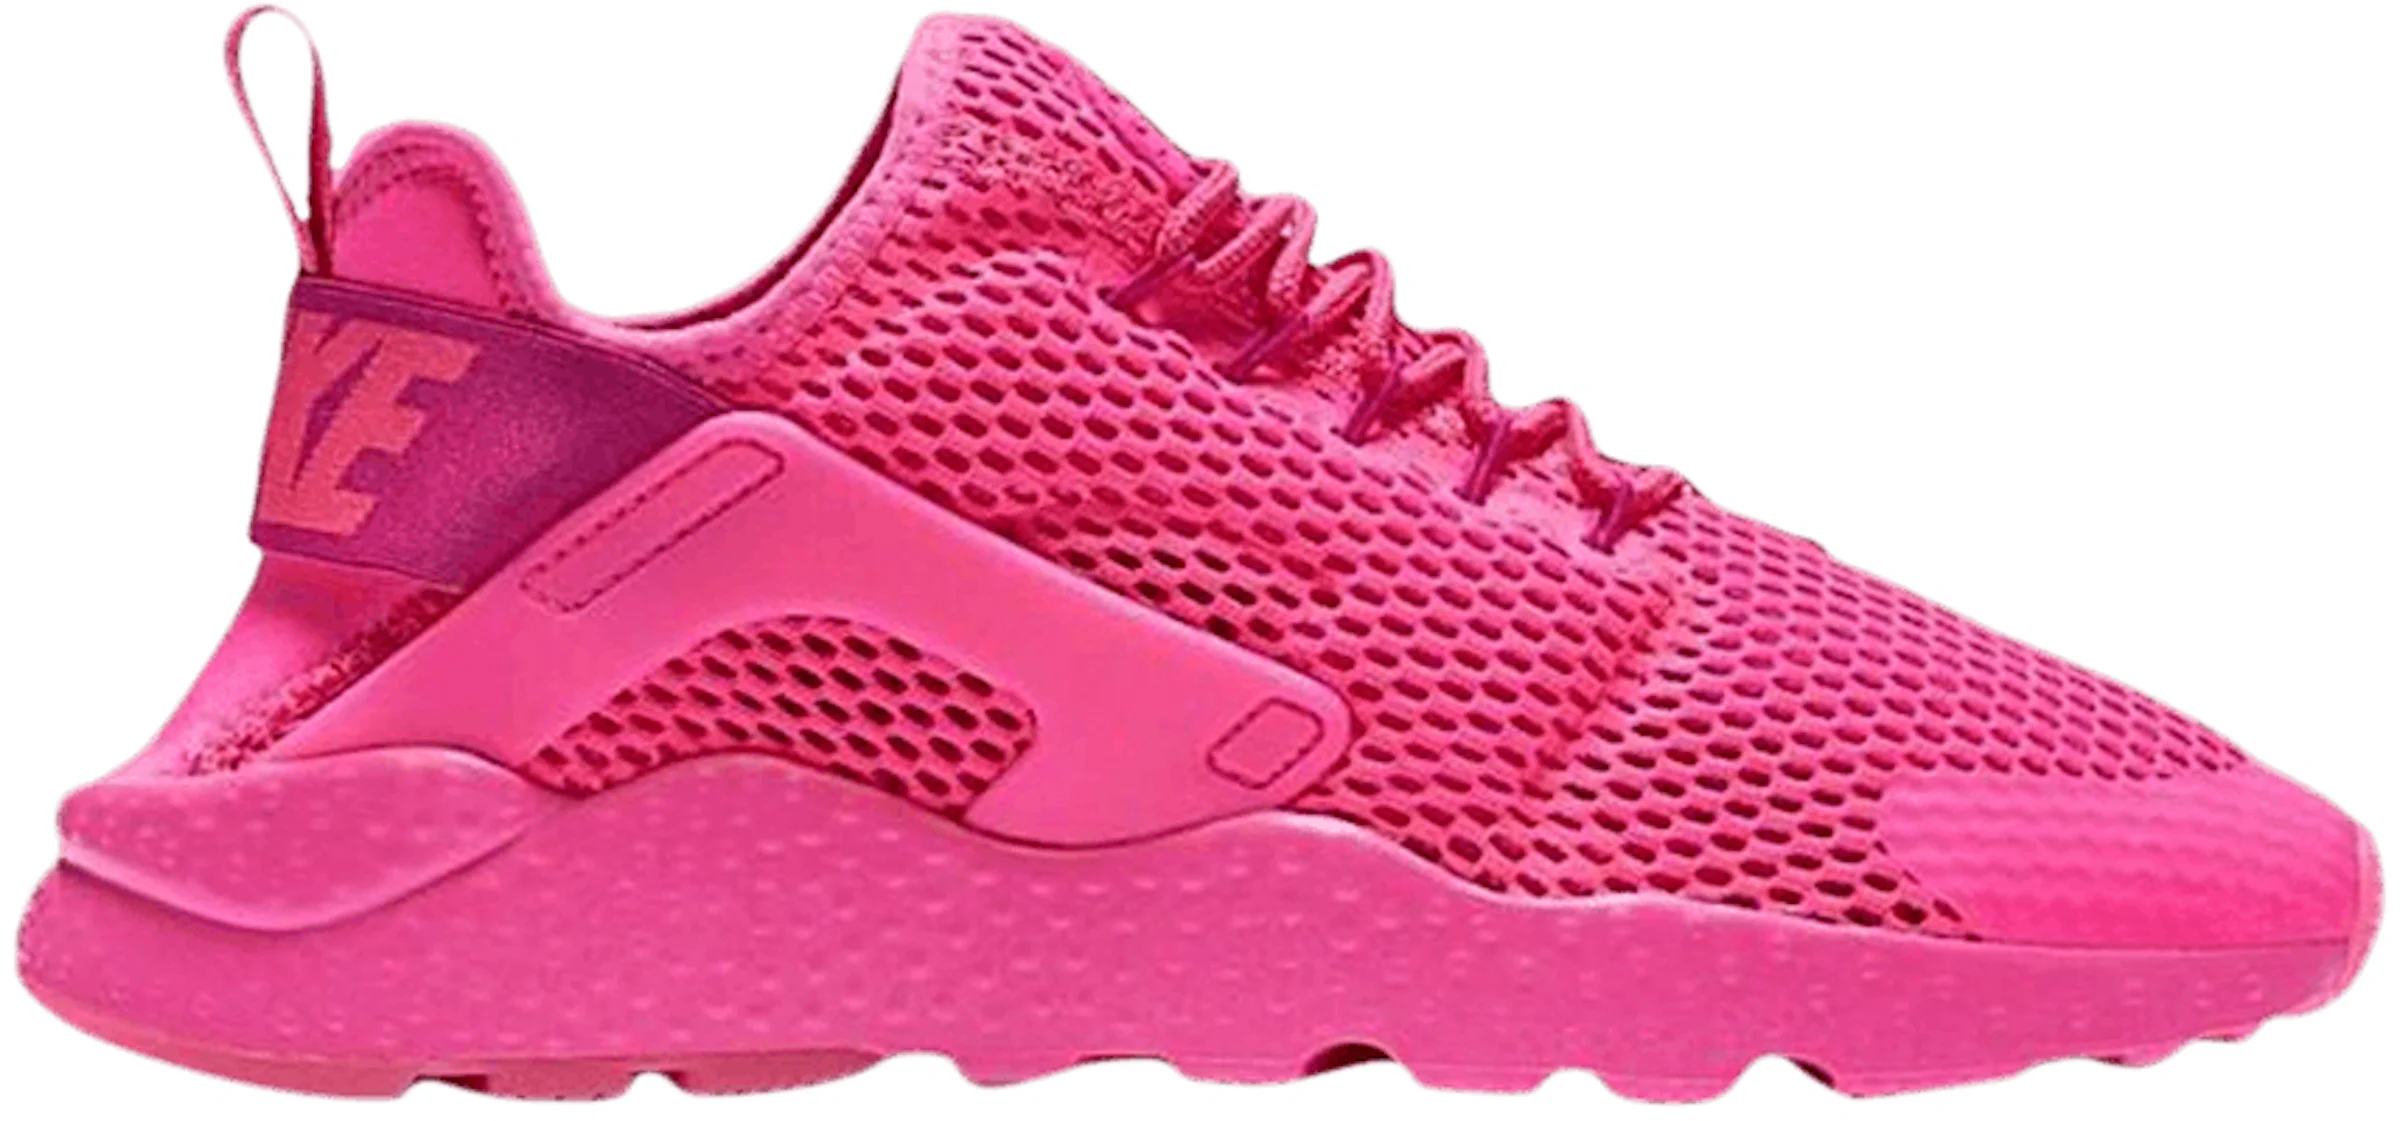 Nike Air Huarache Run Ultra Breathe Pink Blast (Women's) - 833292-600 - US